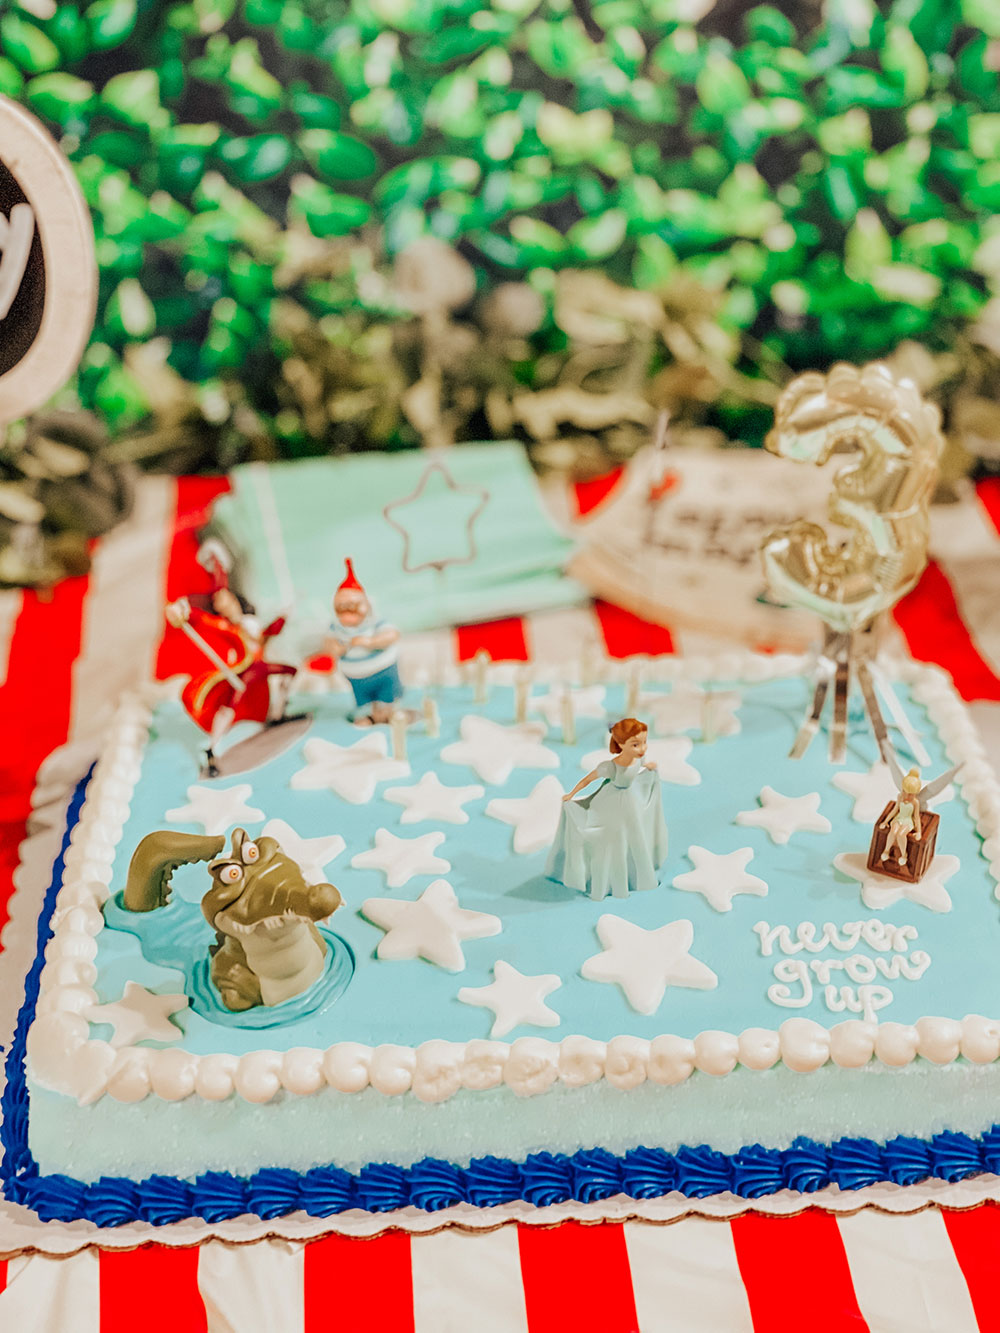 peter pan birthday party cake - never grow up